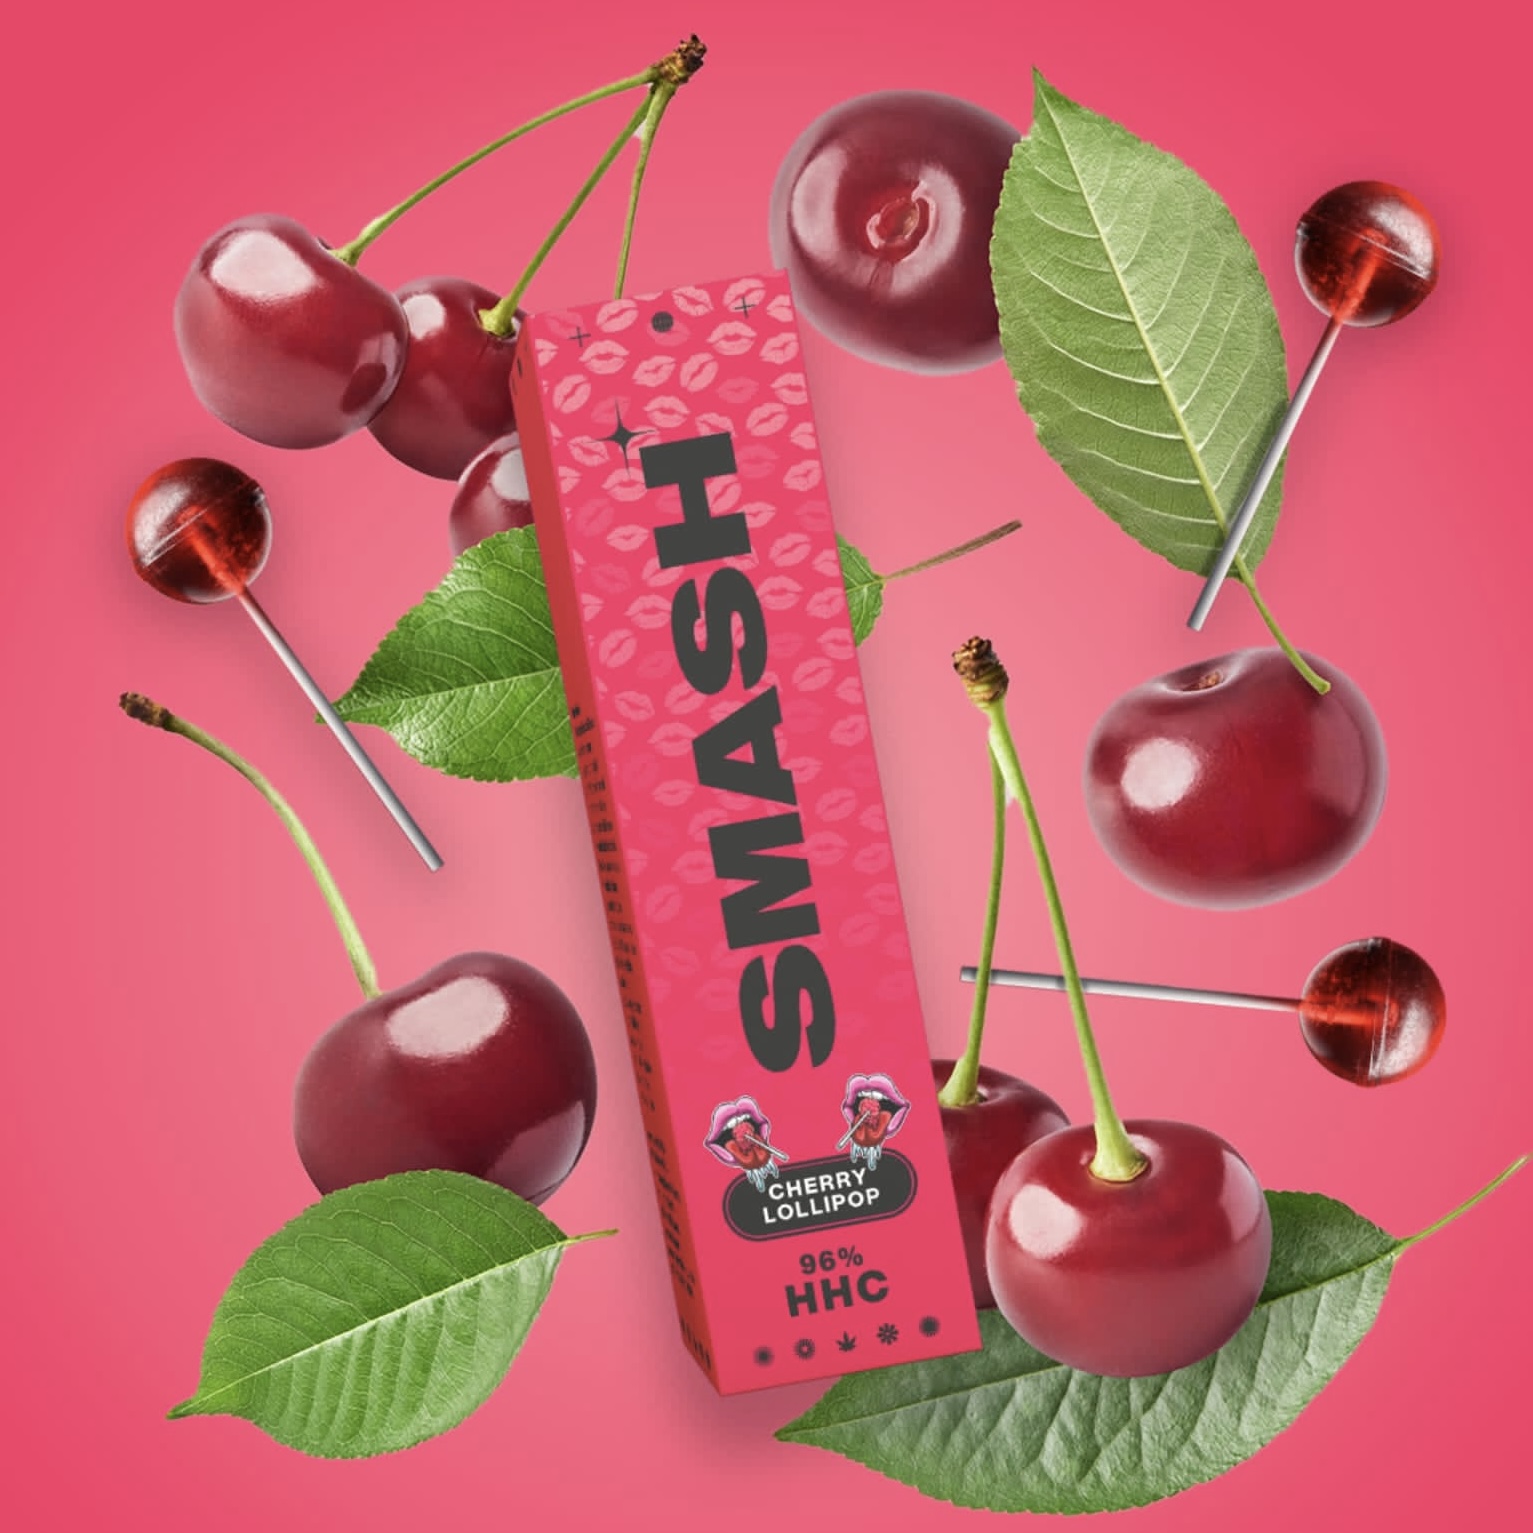 SMASH HHC Vape - Cherry Lollipop 1ml